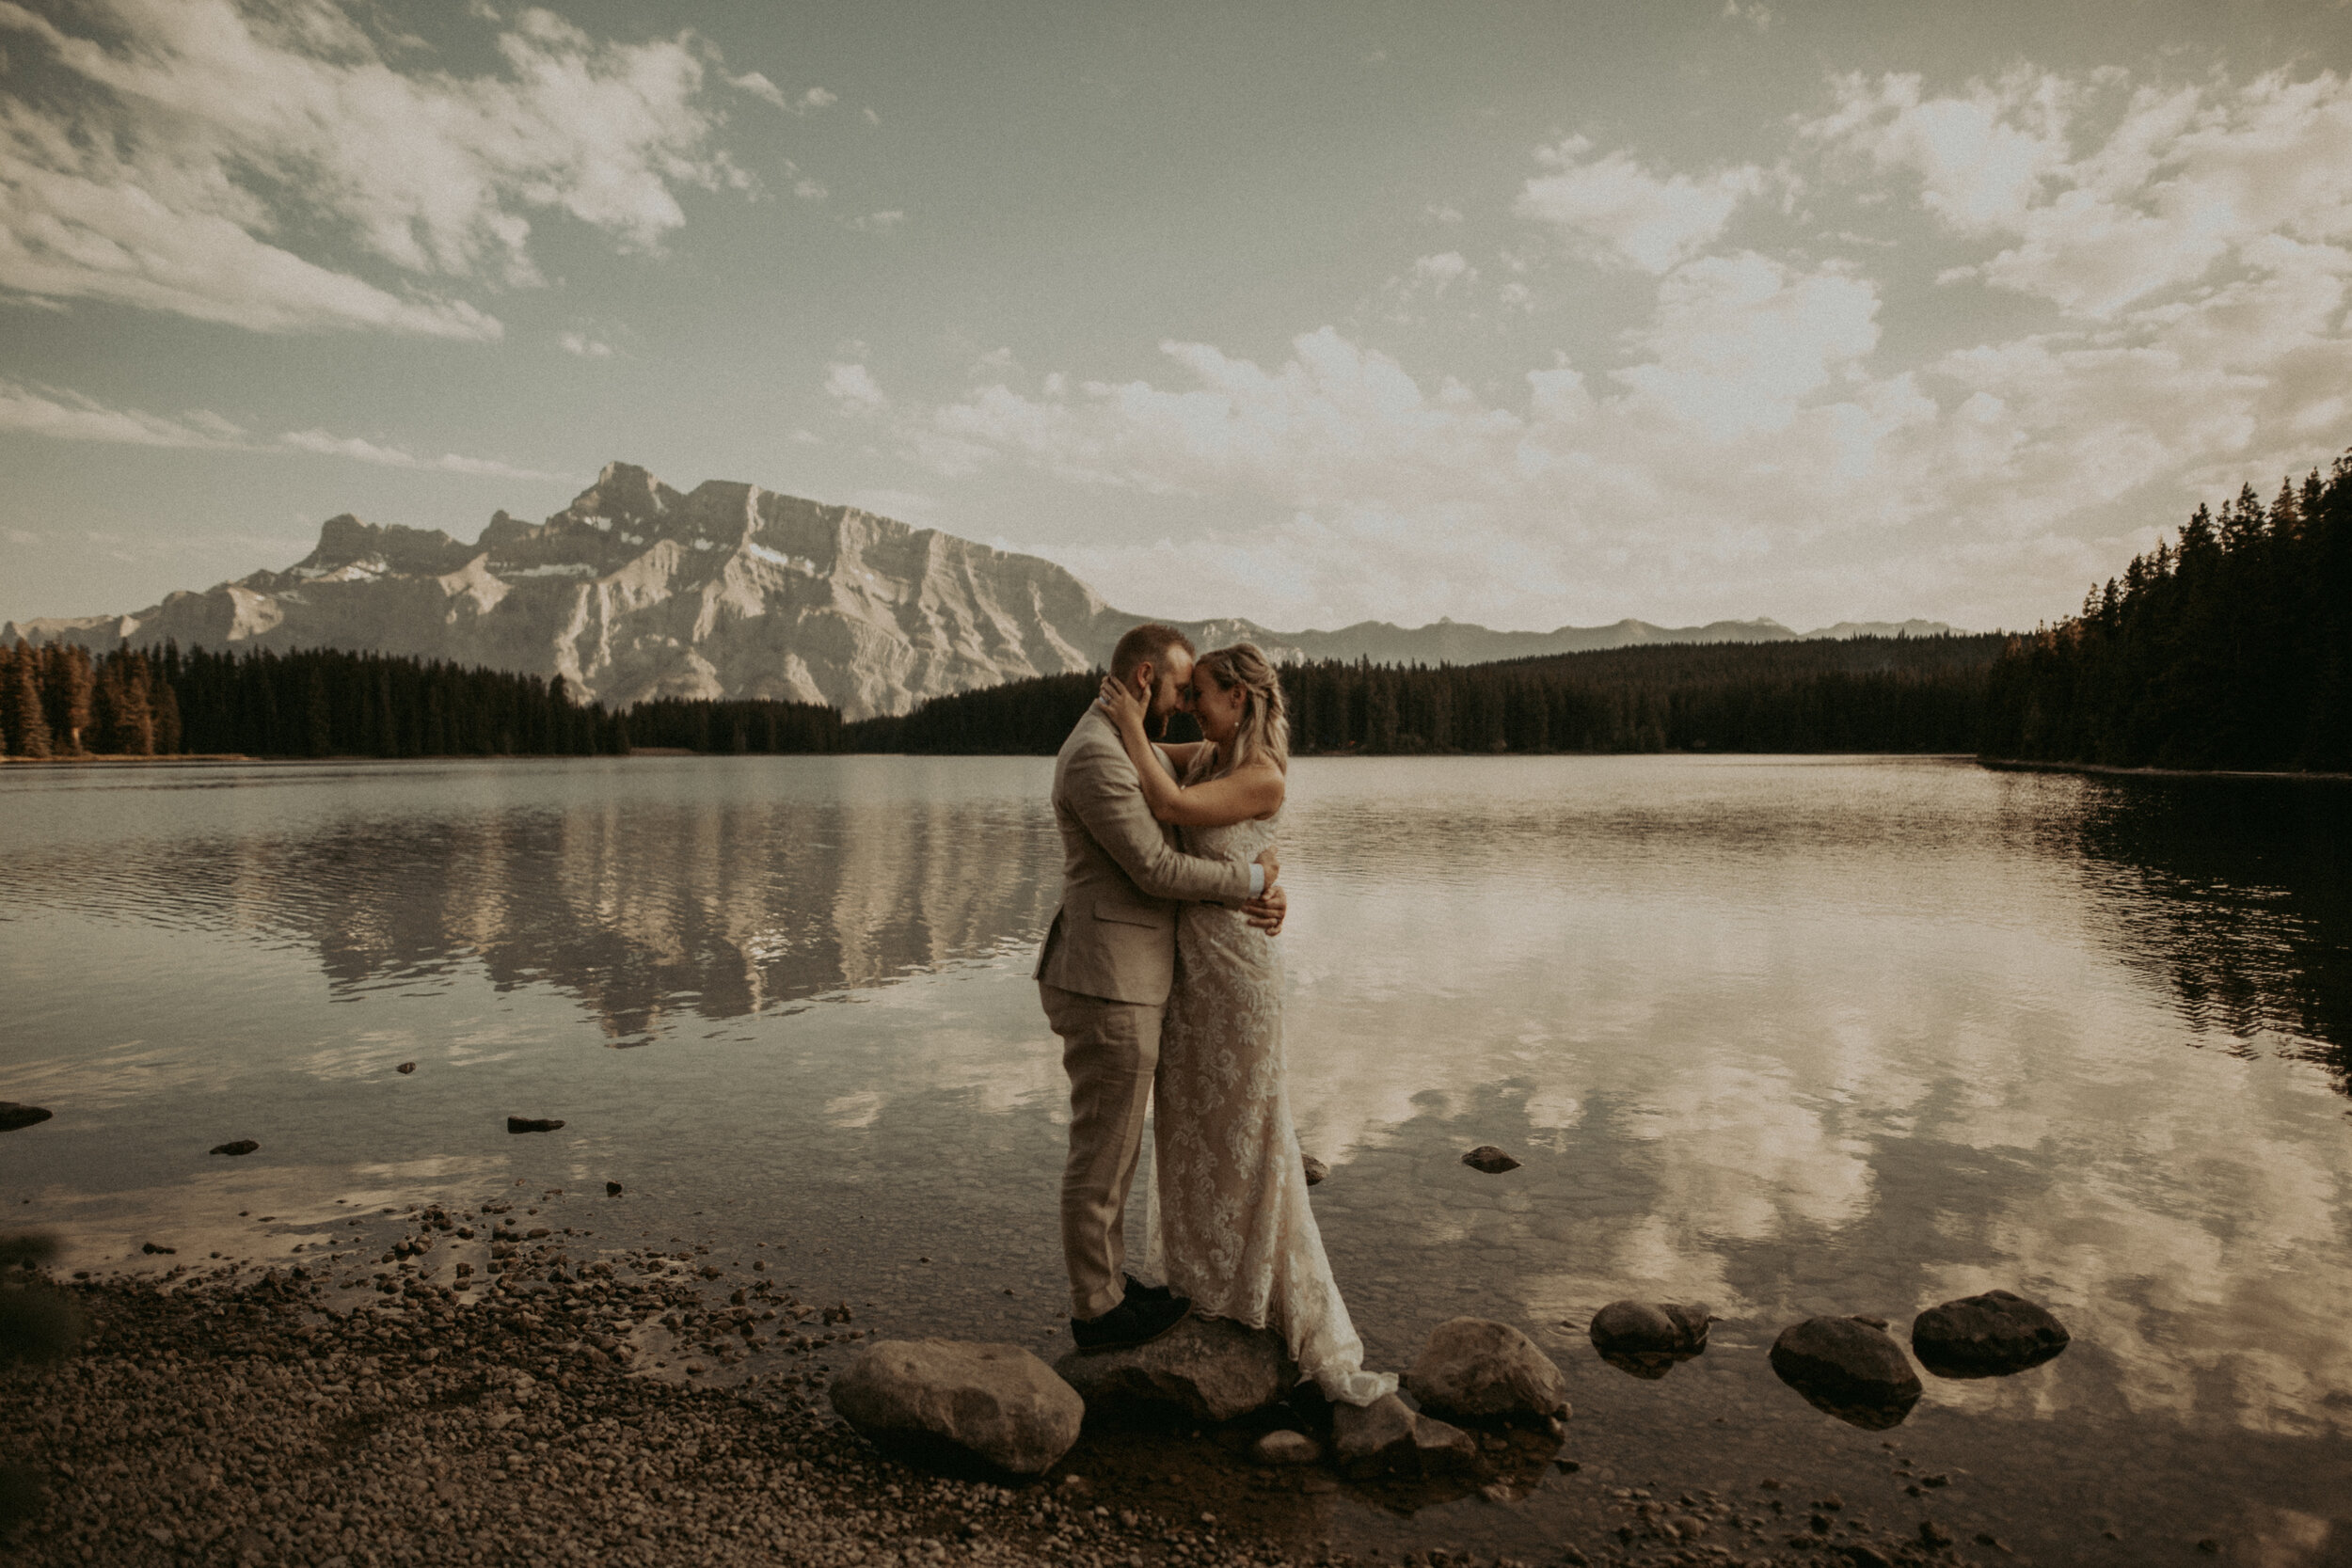 Calgary Elopement Photographer, Calgary Elopement, Calgary wedding photographer, Calgary Elopement locations